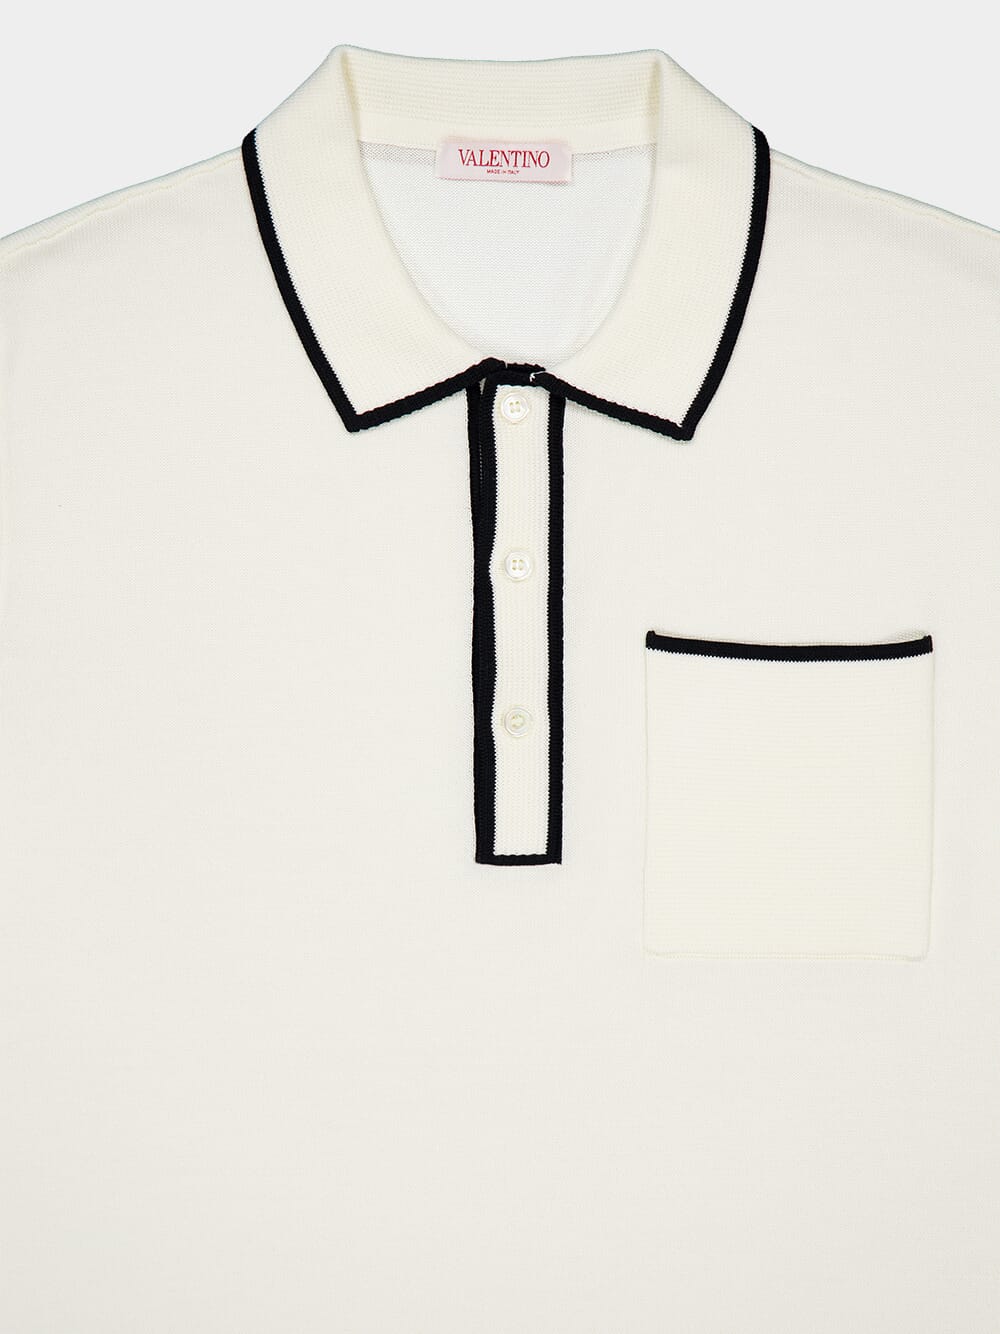 Signature VLogo White Polo Shirt